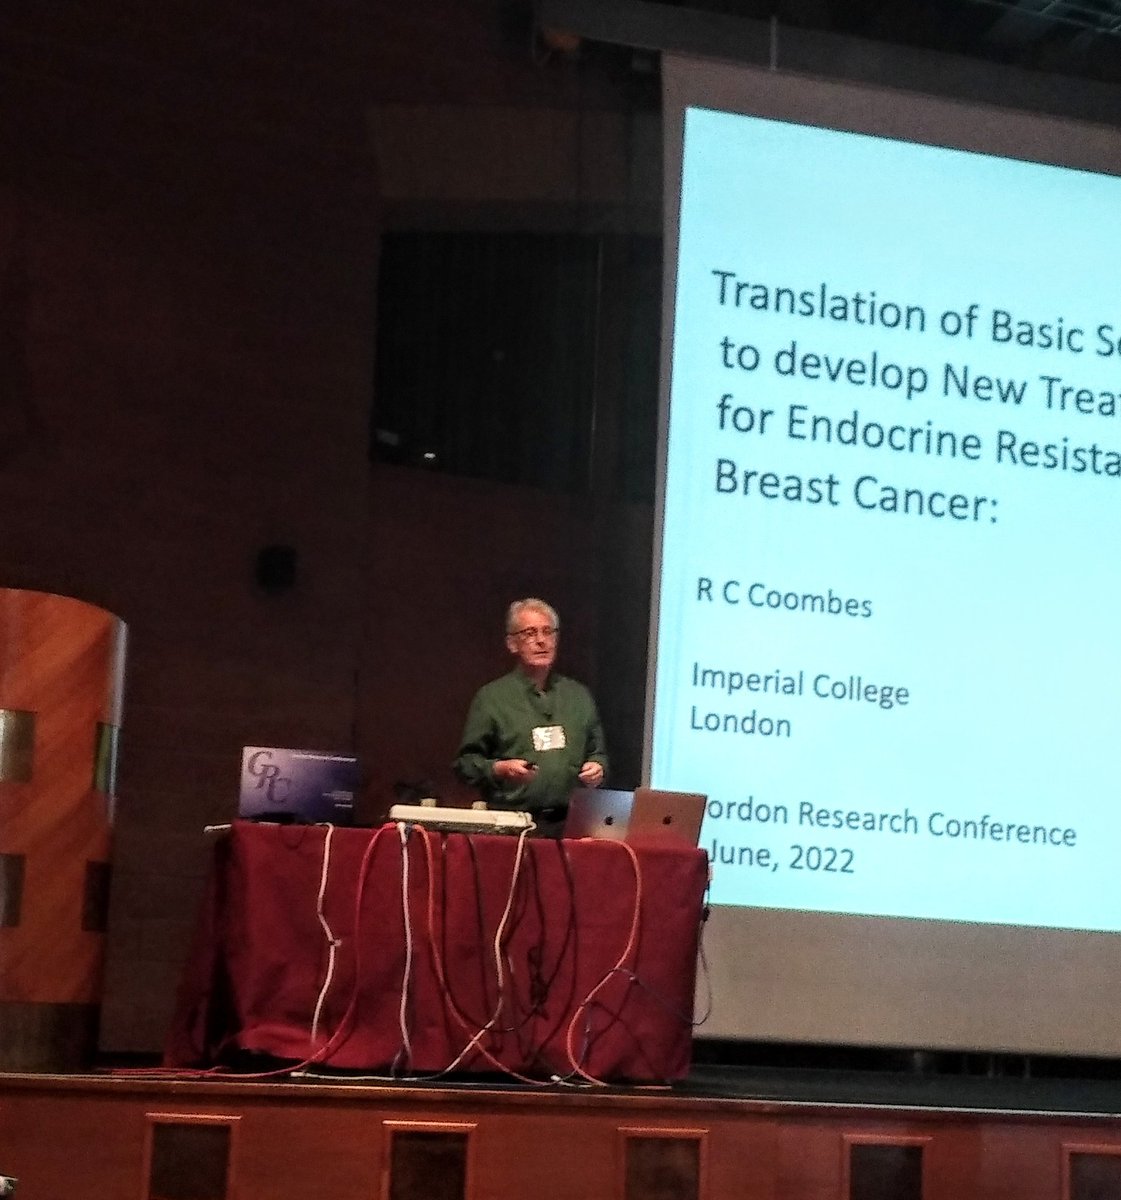 Keynote speaker Raoul Charles Coombes...treating patients with #metastaticdisease. @GordonConf #breastcancer #EstrogenReceptor #tamoxifen